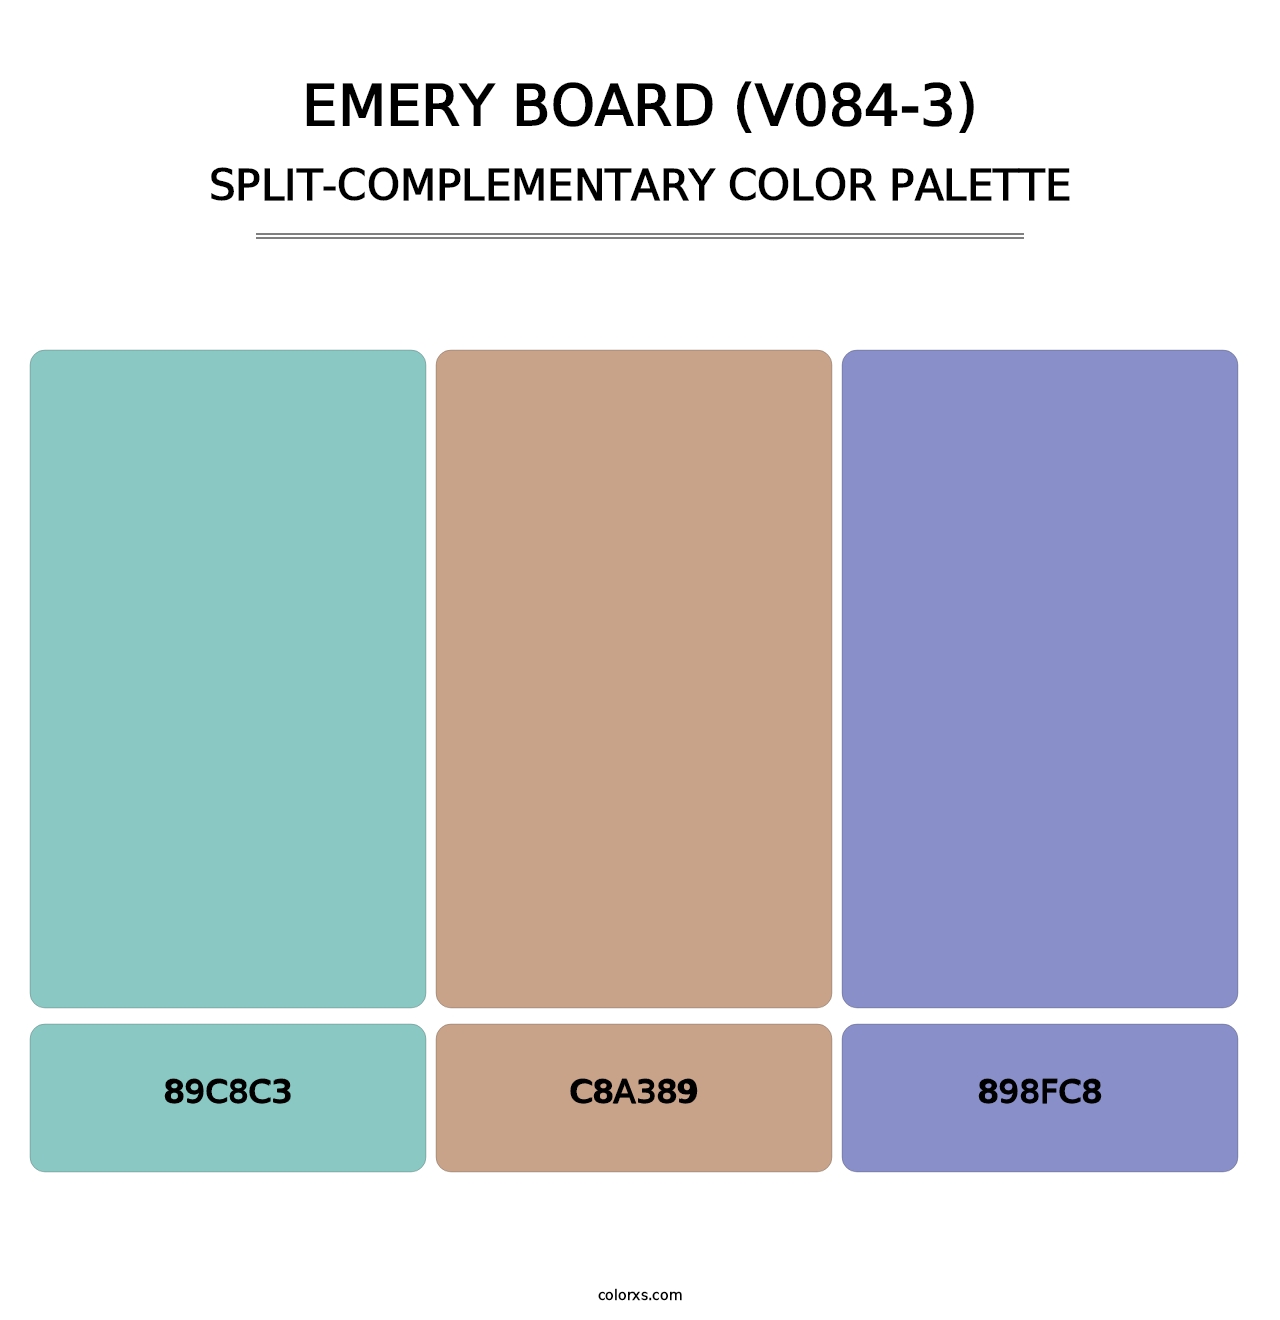 Emery Board (V084-3) - Split-Complementary Color Palette